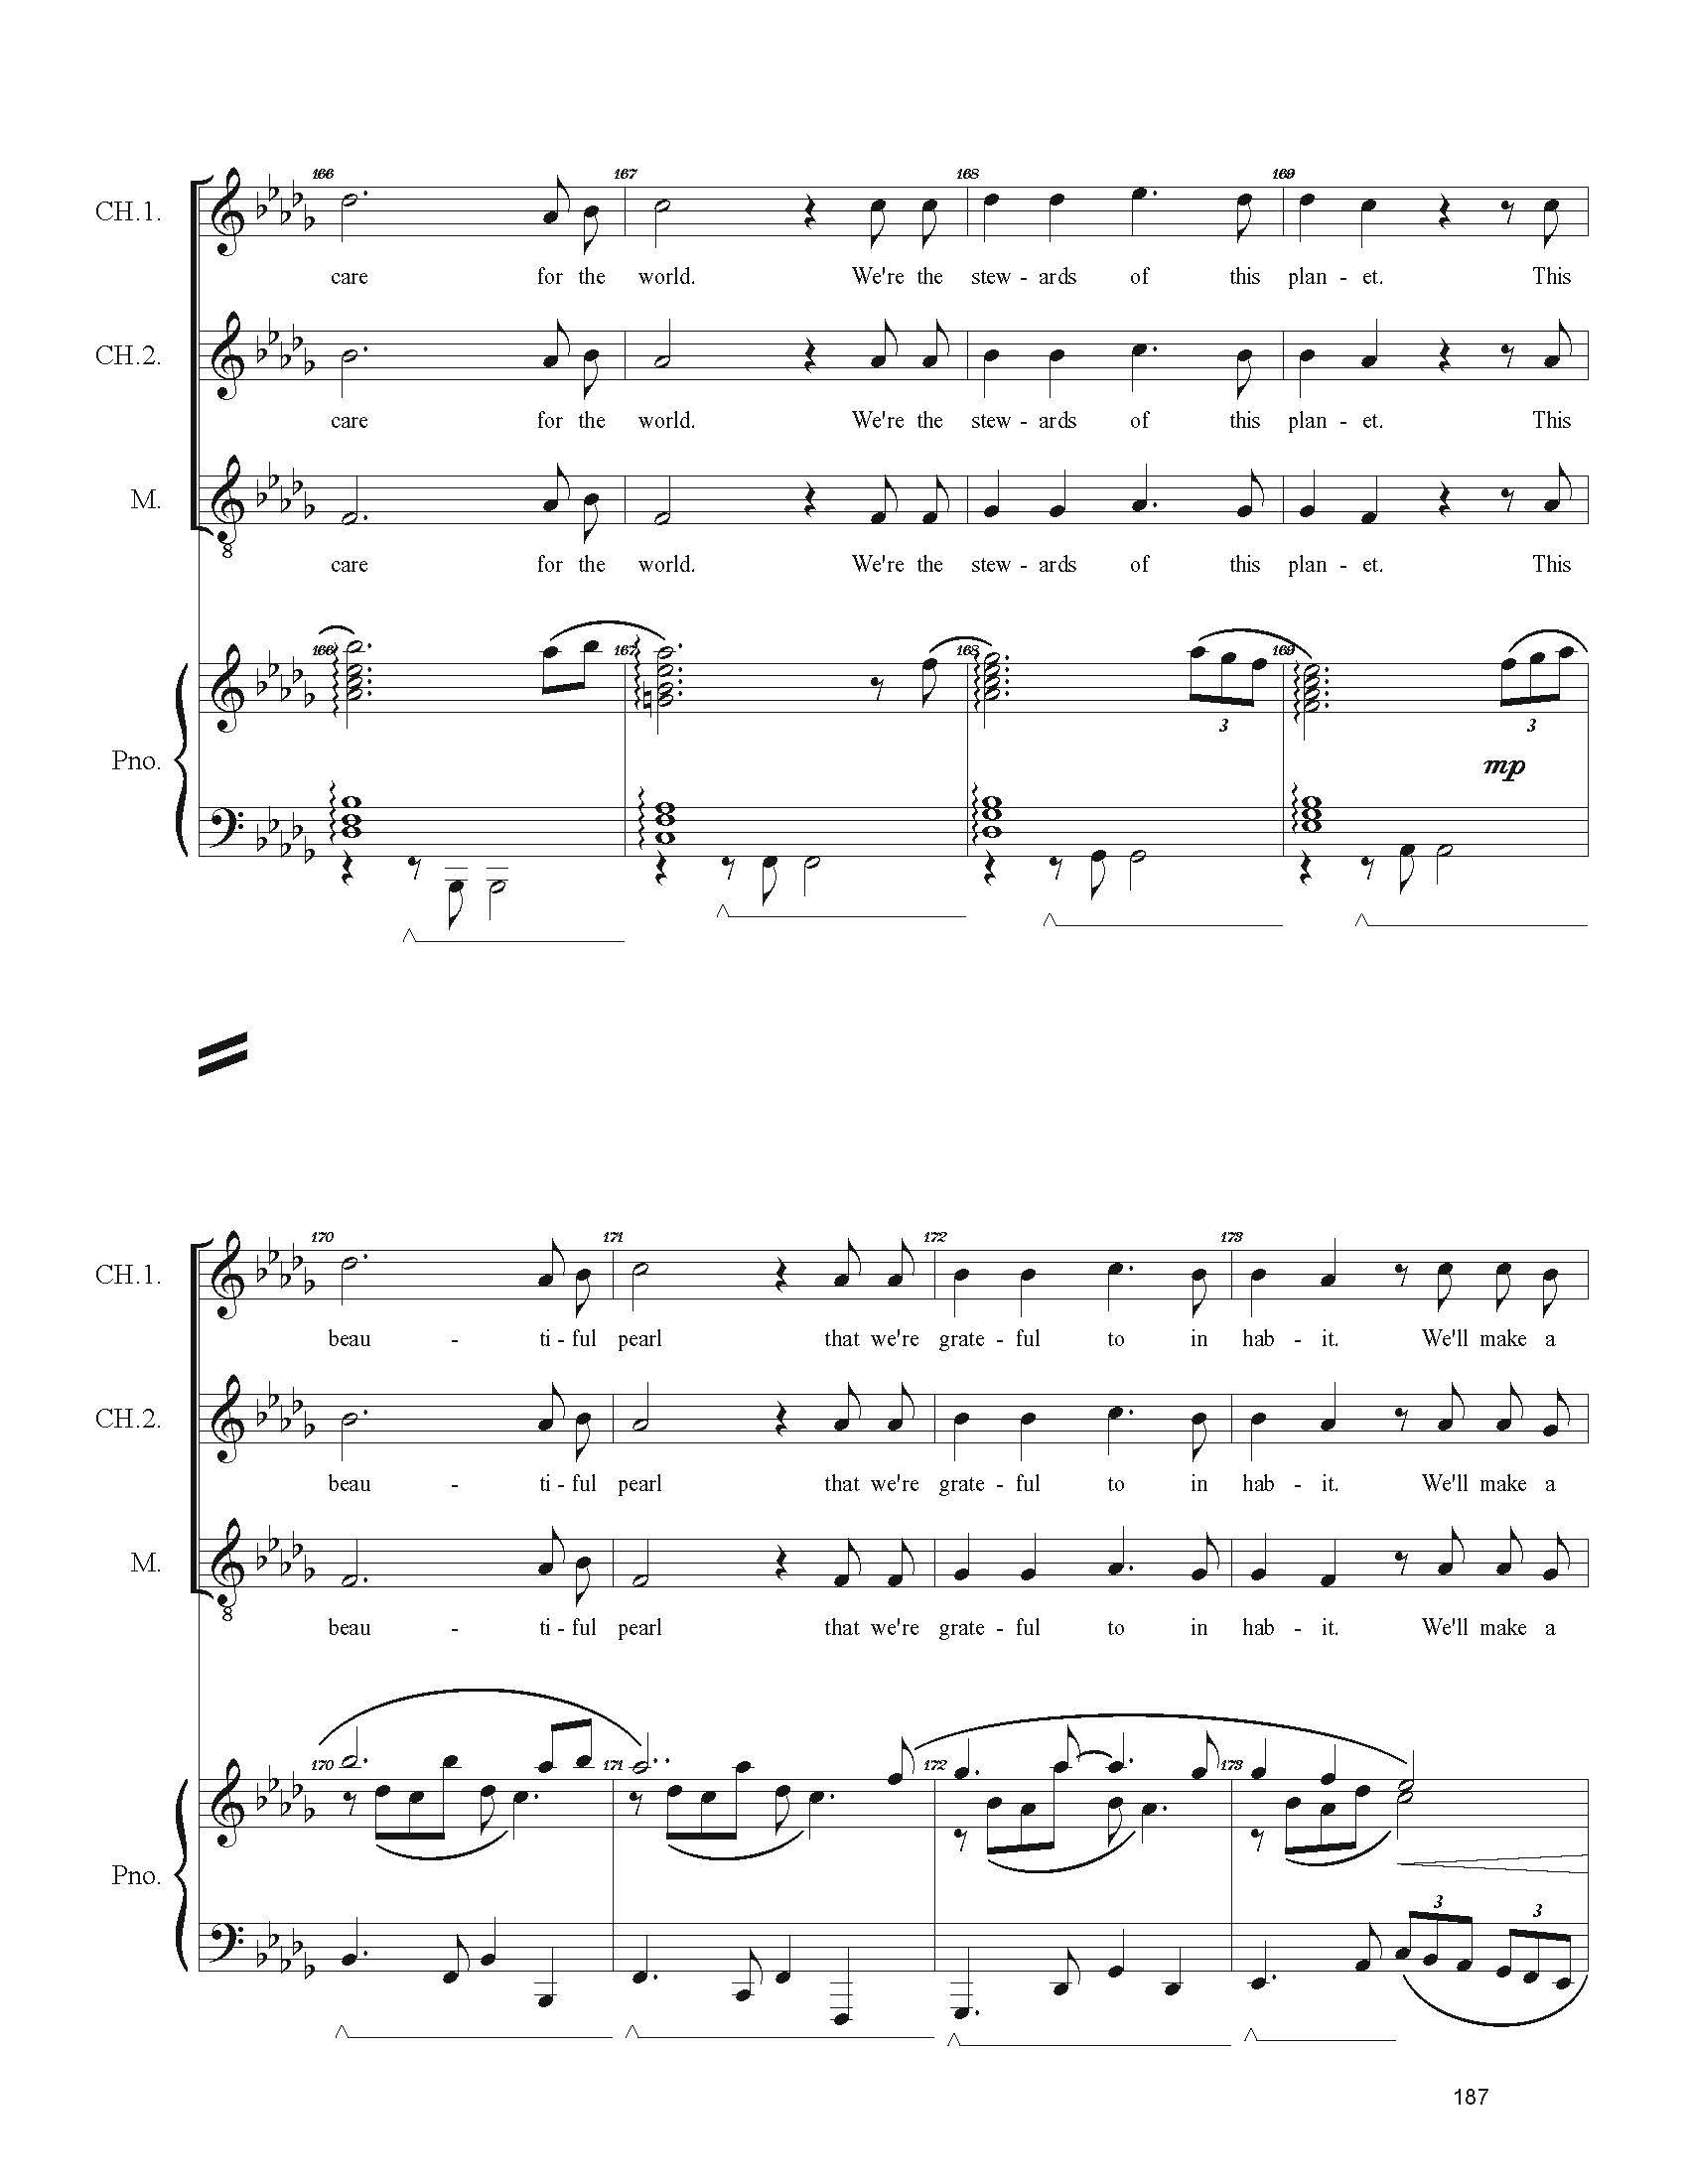 FULL PIANO VOCAL SCORE DRAFT 1 - Score_Page_187.jpg